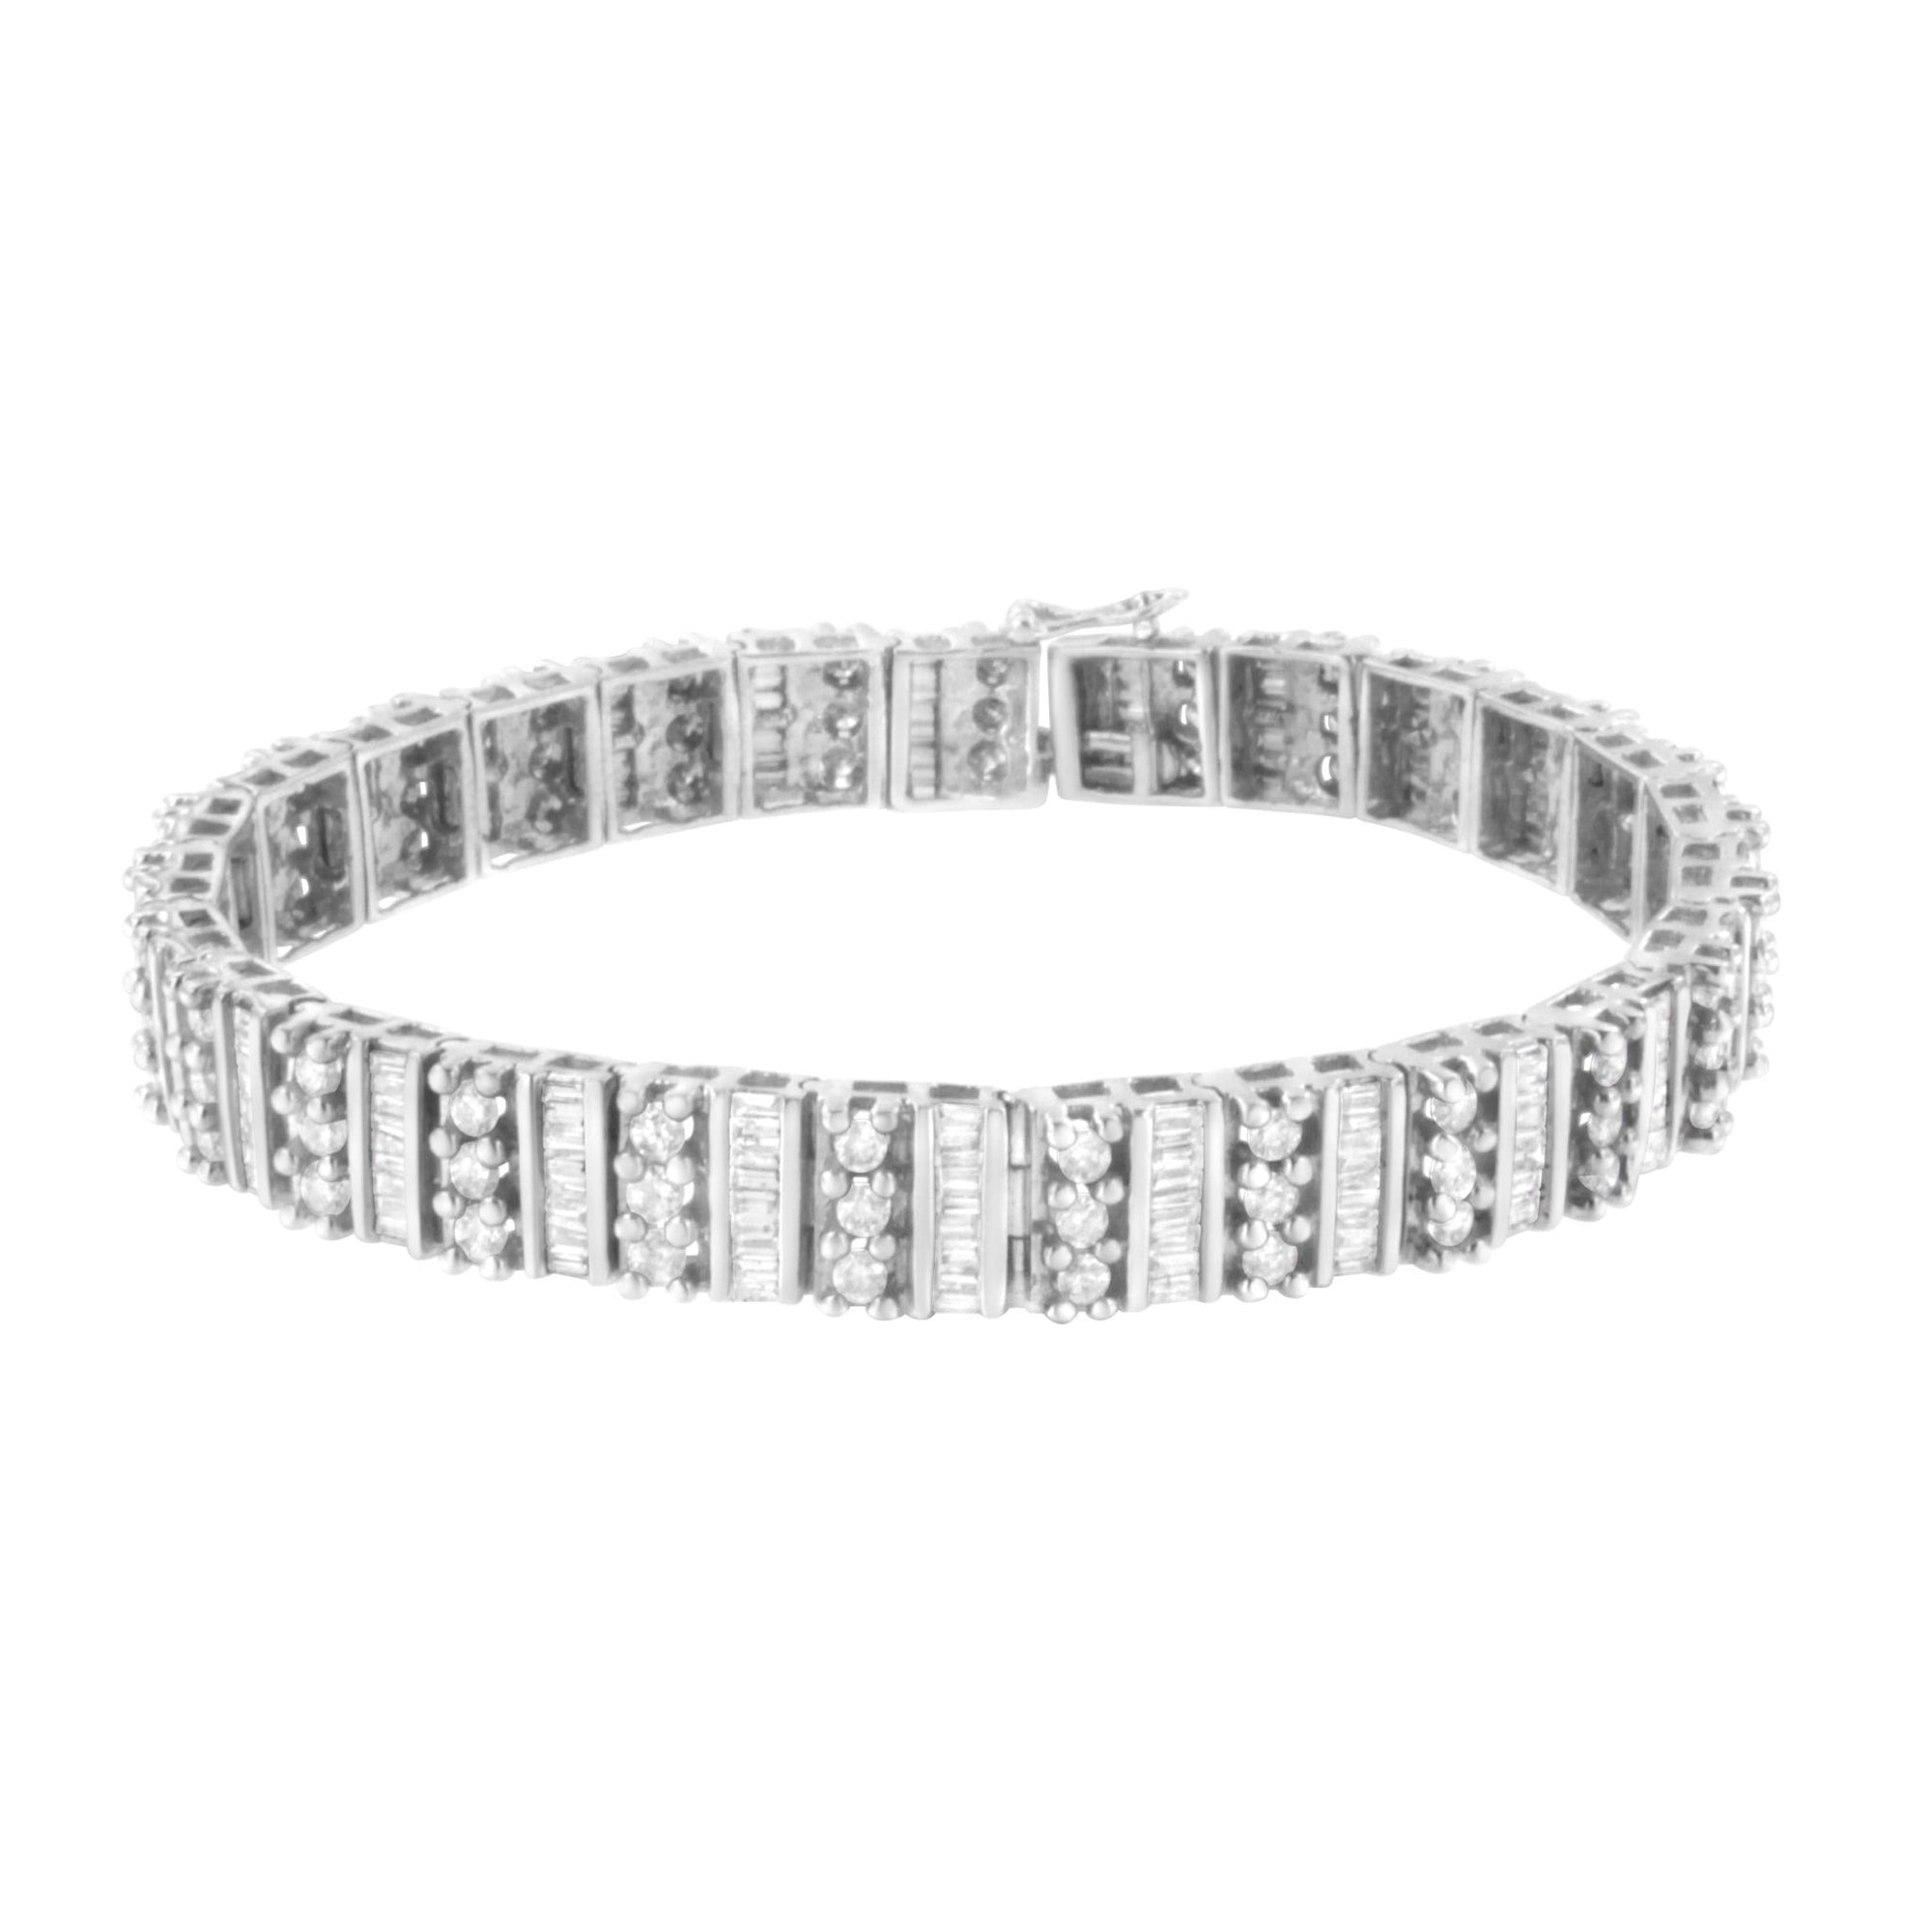 14K White Gold 4 7/8 cttw Baguette & Round Brilliant-Cut Diamond Channel- & Prong-Set Tennis Bracelet (I-J Color, I1-I2 Clarity) - Size 7.25" - LinkagejewelrydesignLinkagejewelrydesign